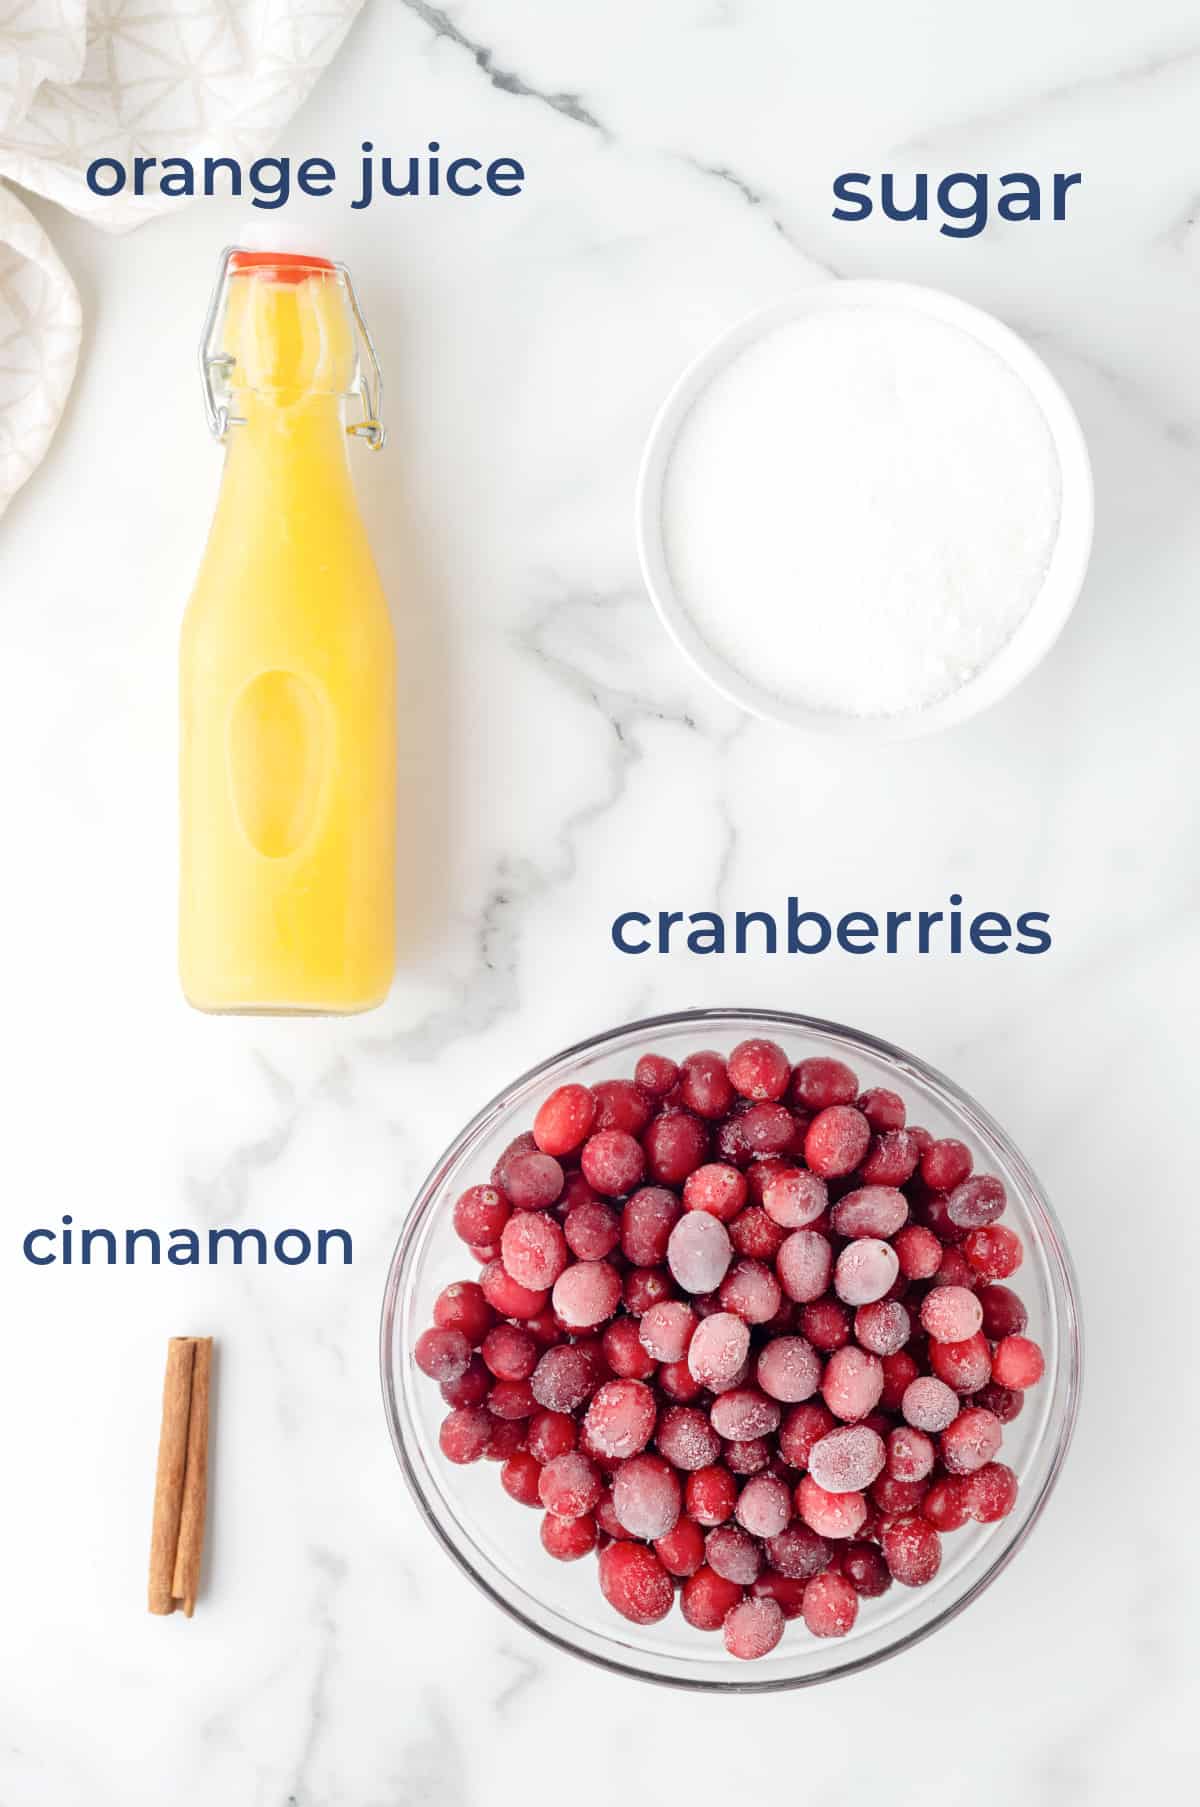 ingredients for homemade cranberry sauce - cranberries, sugar, cinnamon and orange juice